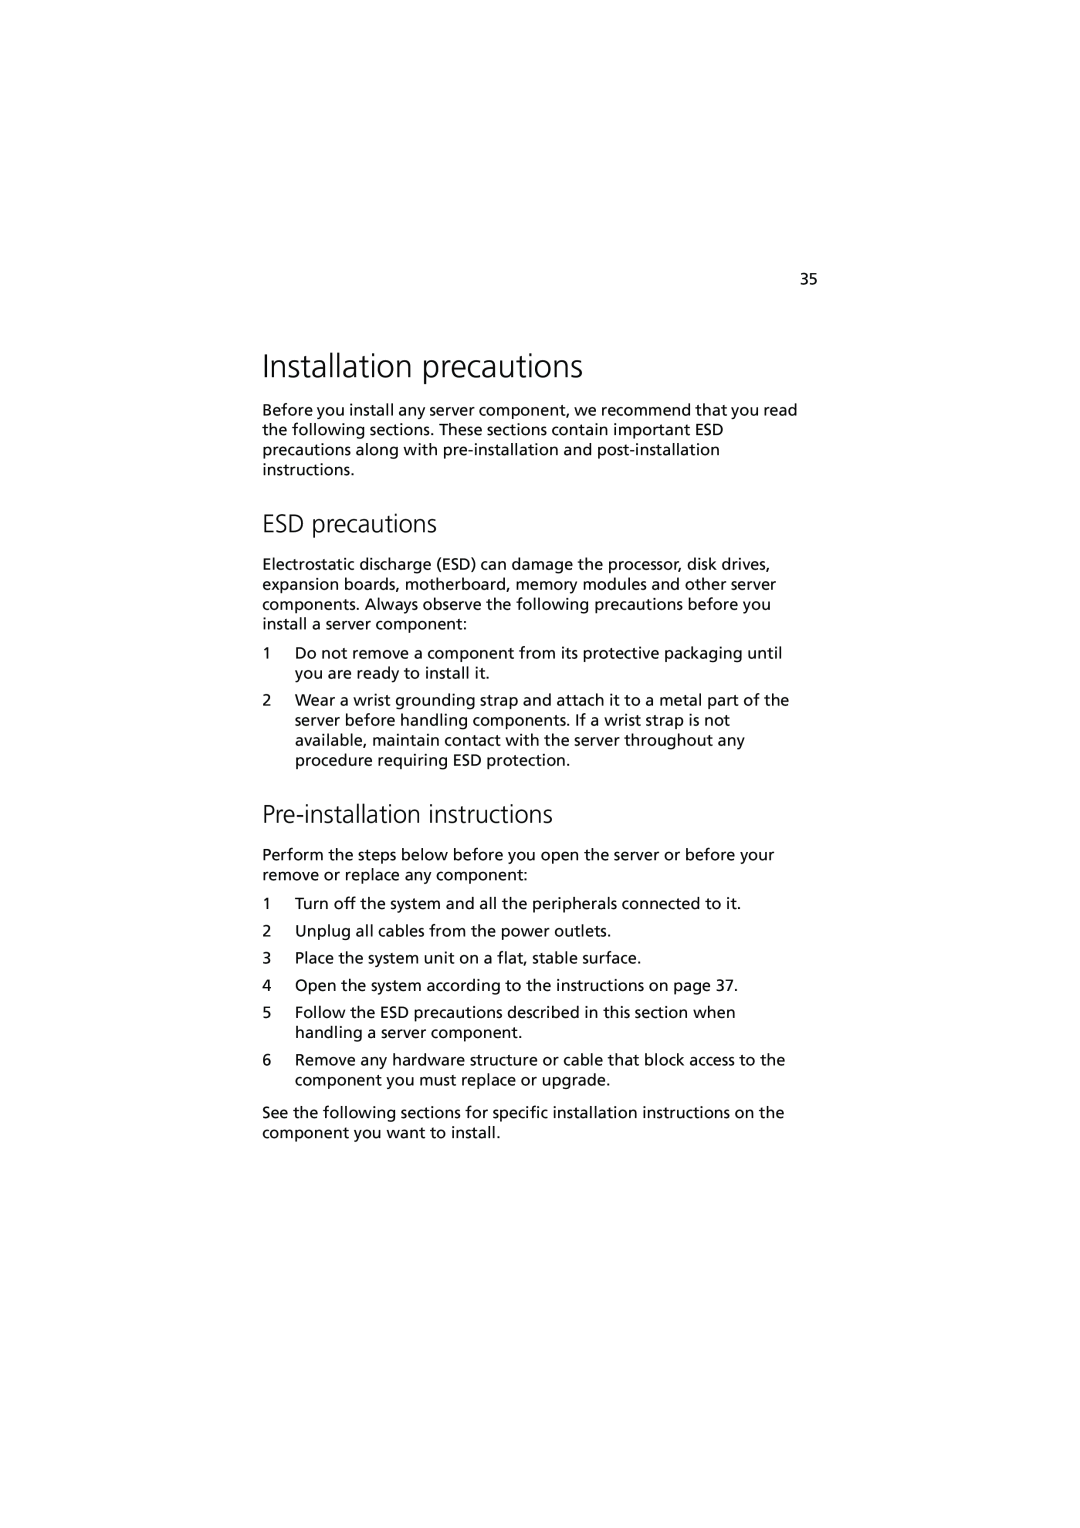 Acer R720 Series manual Installation precautions, ESD precautions, Pre-installation instructions 